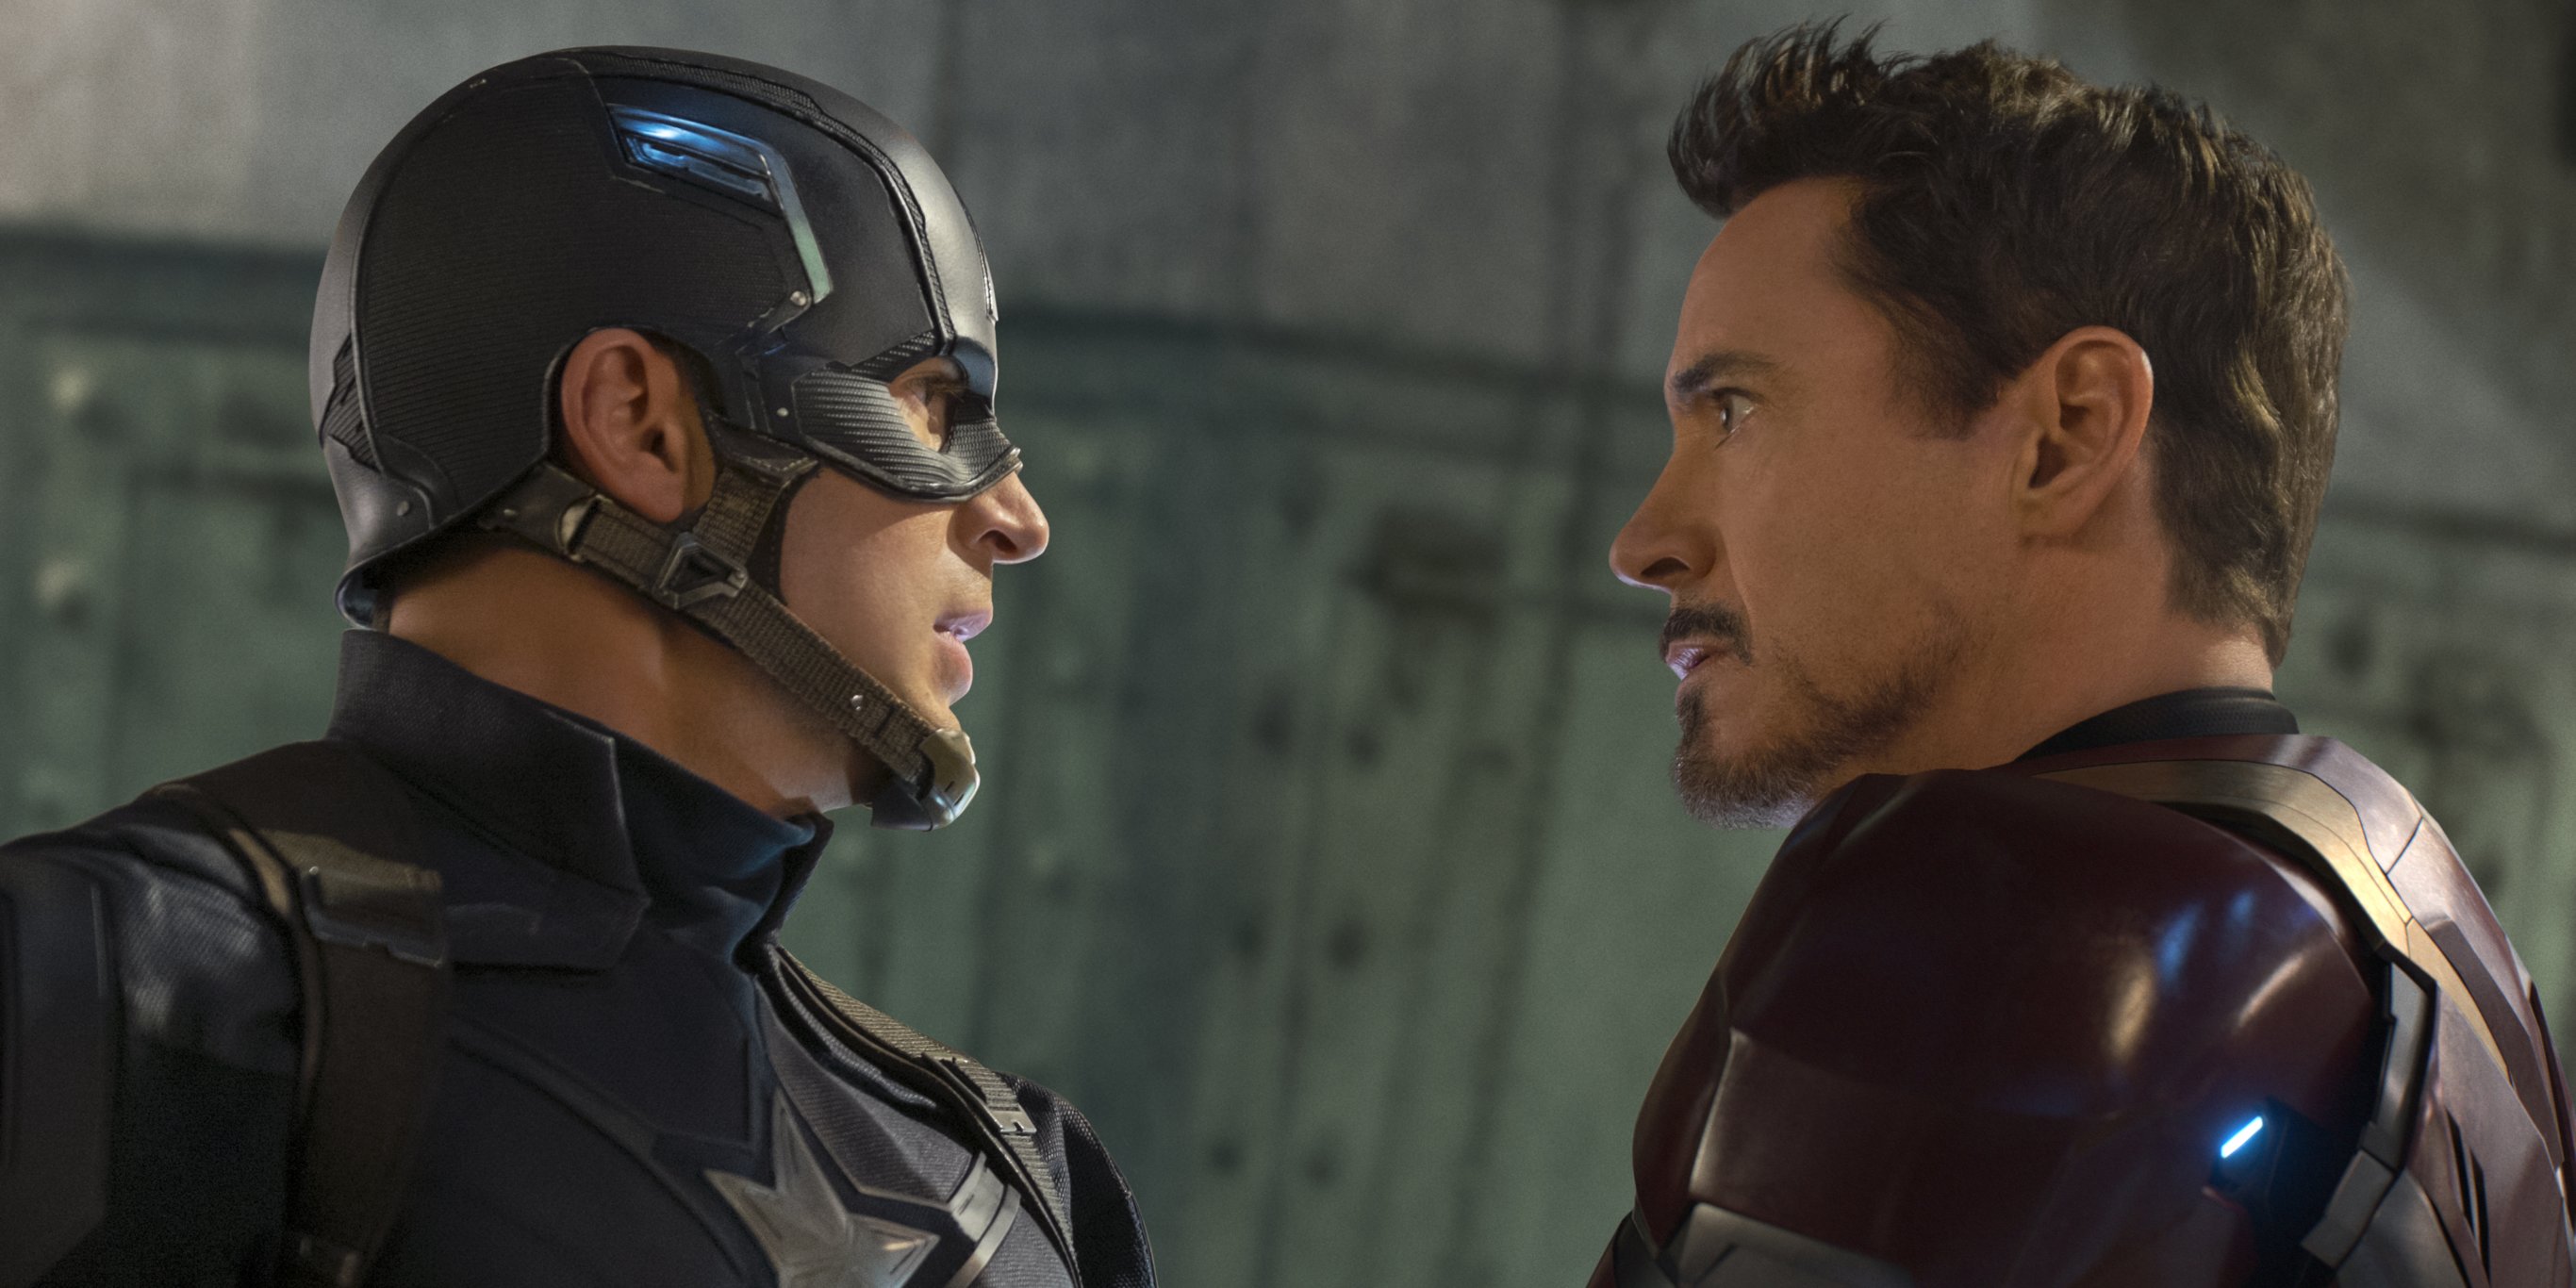 Cap vs. Iron Man